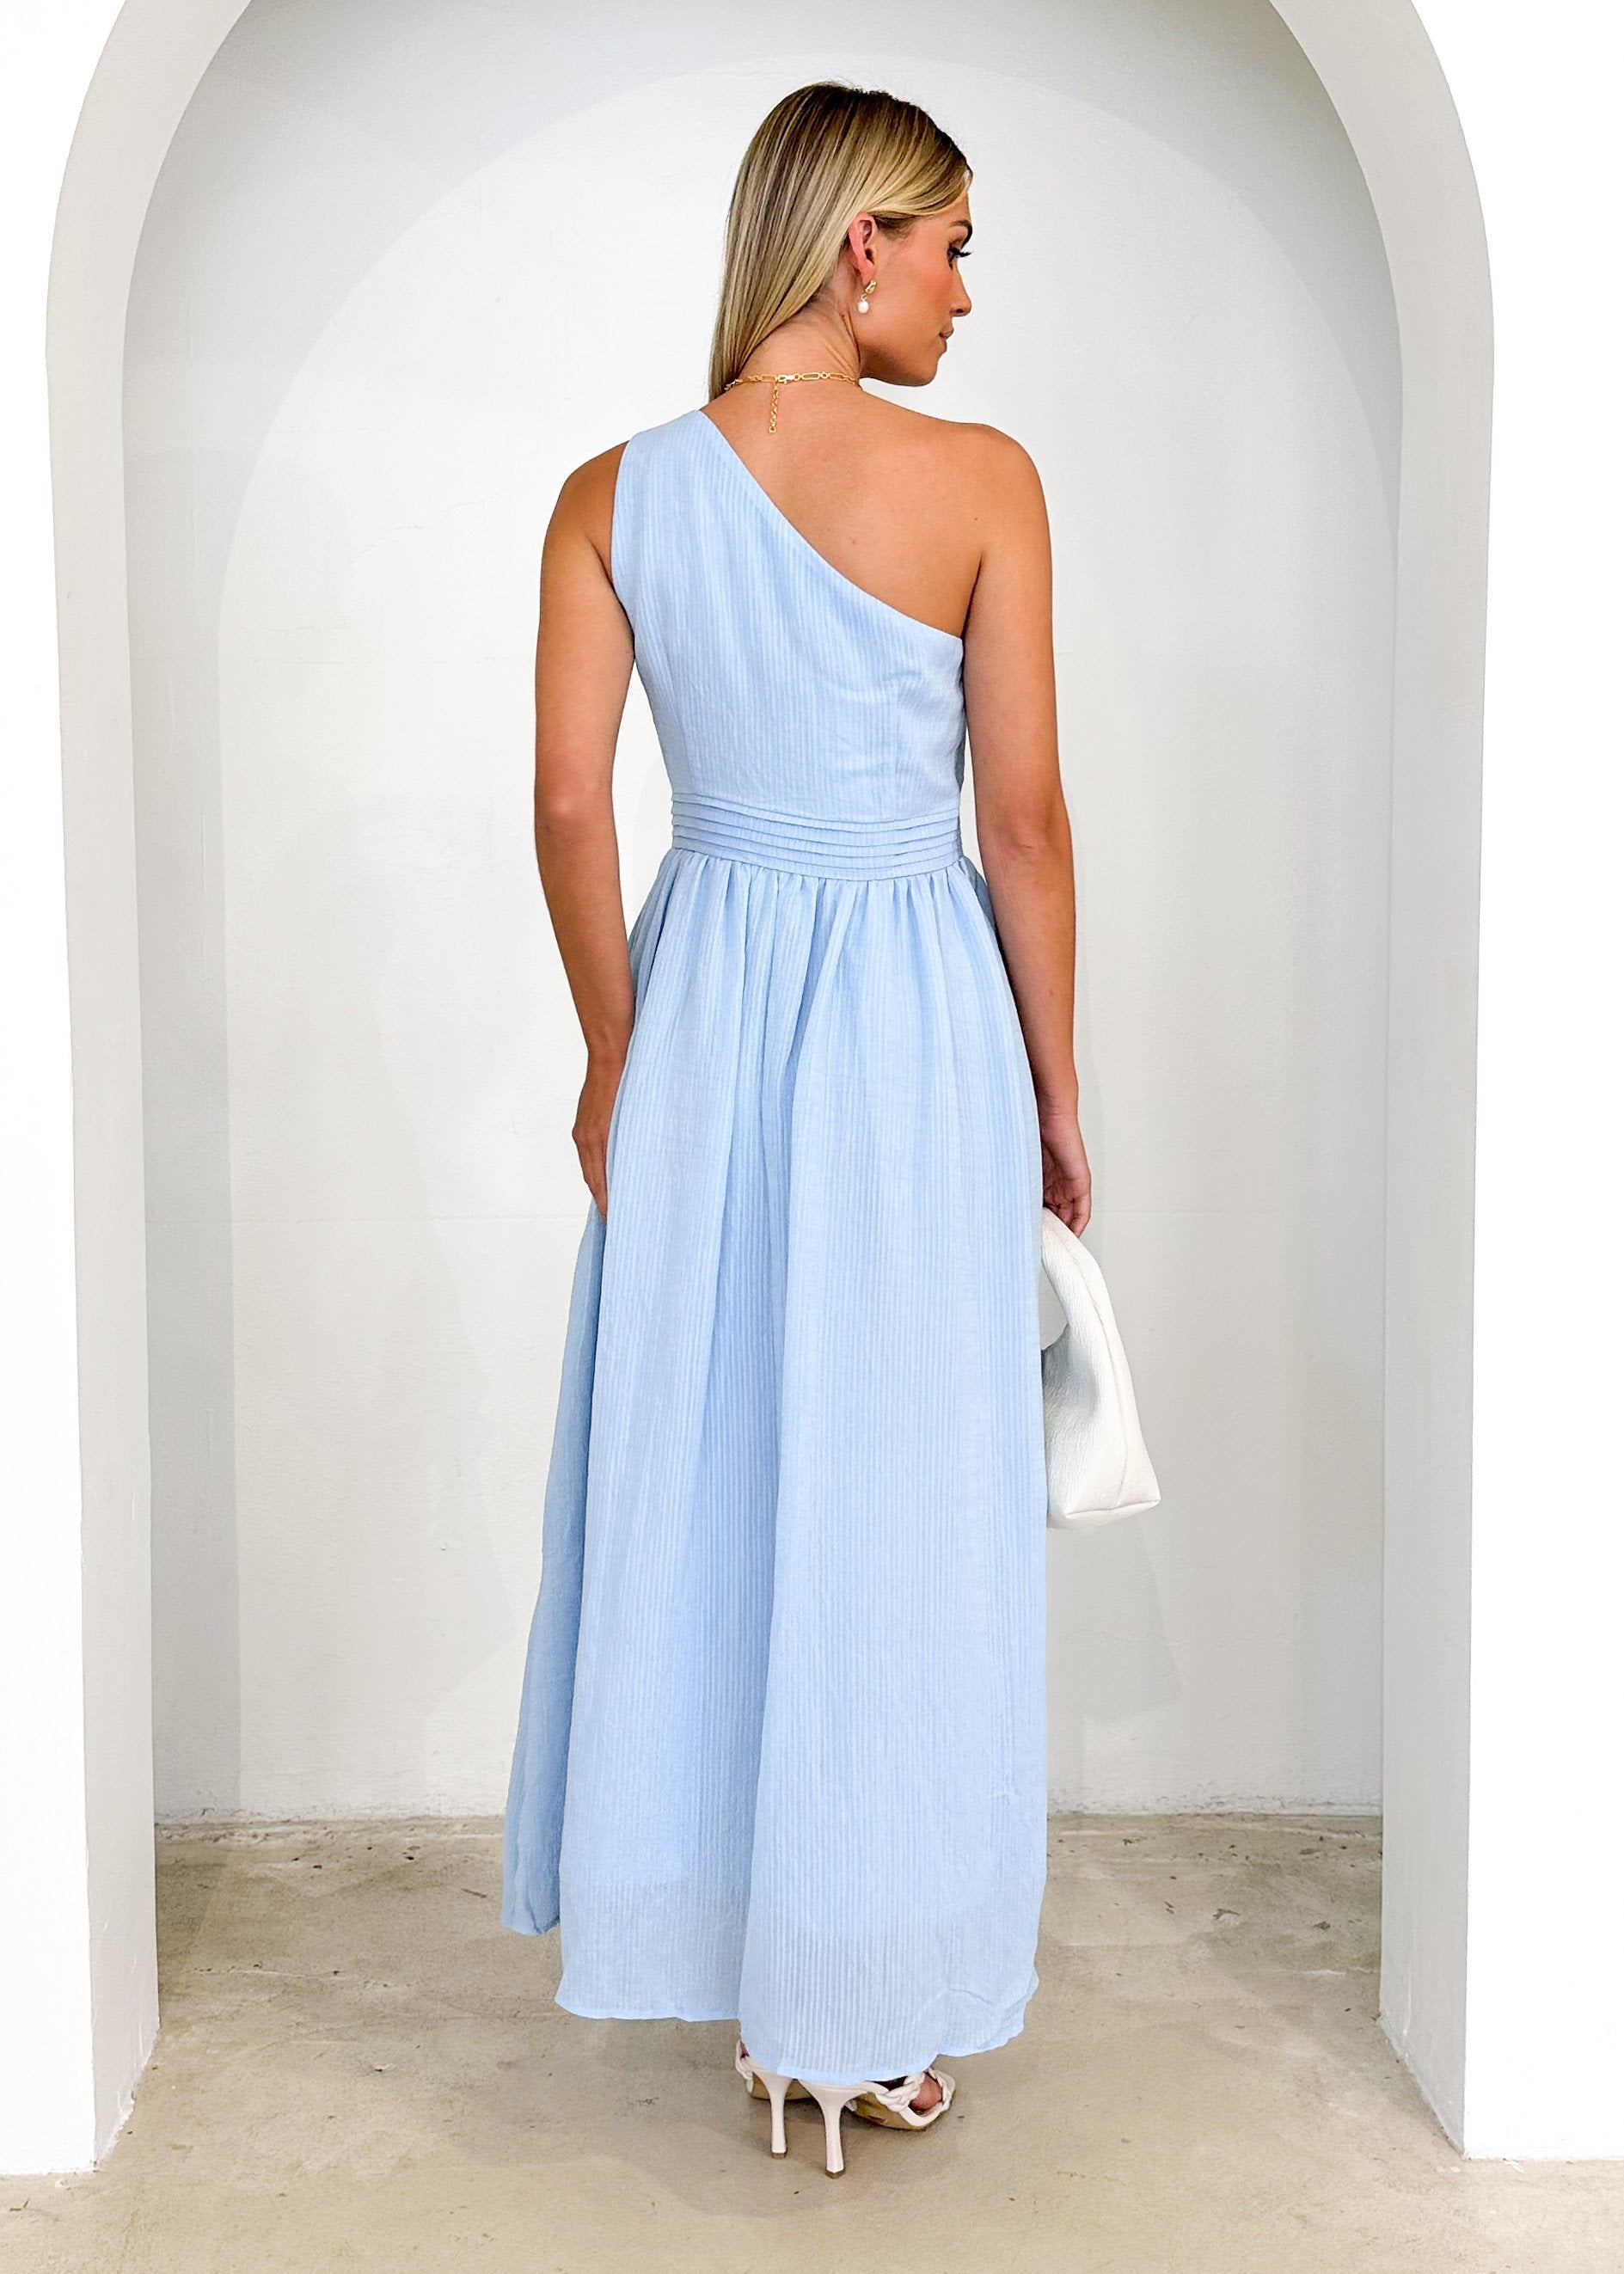 Essja One Shoulder Midi Dress - Soft Blue